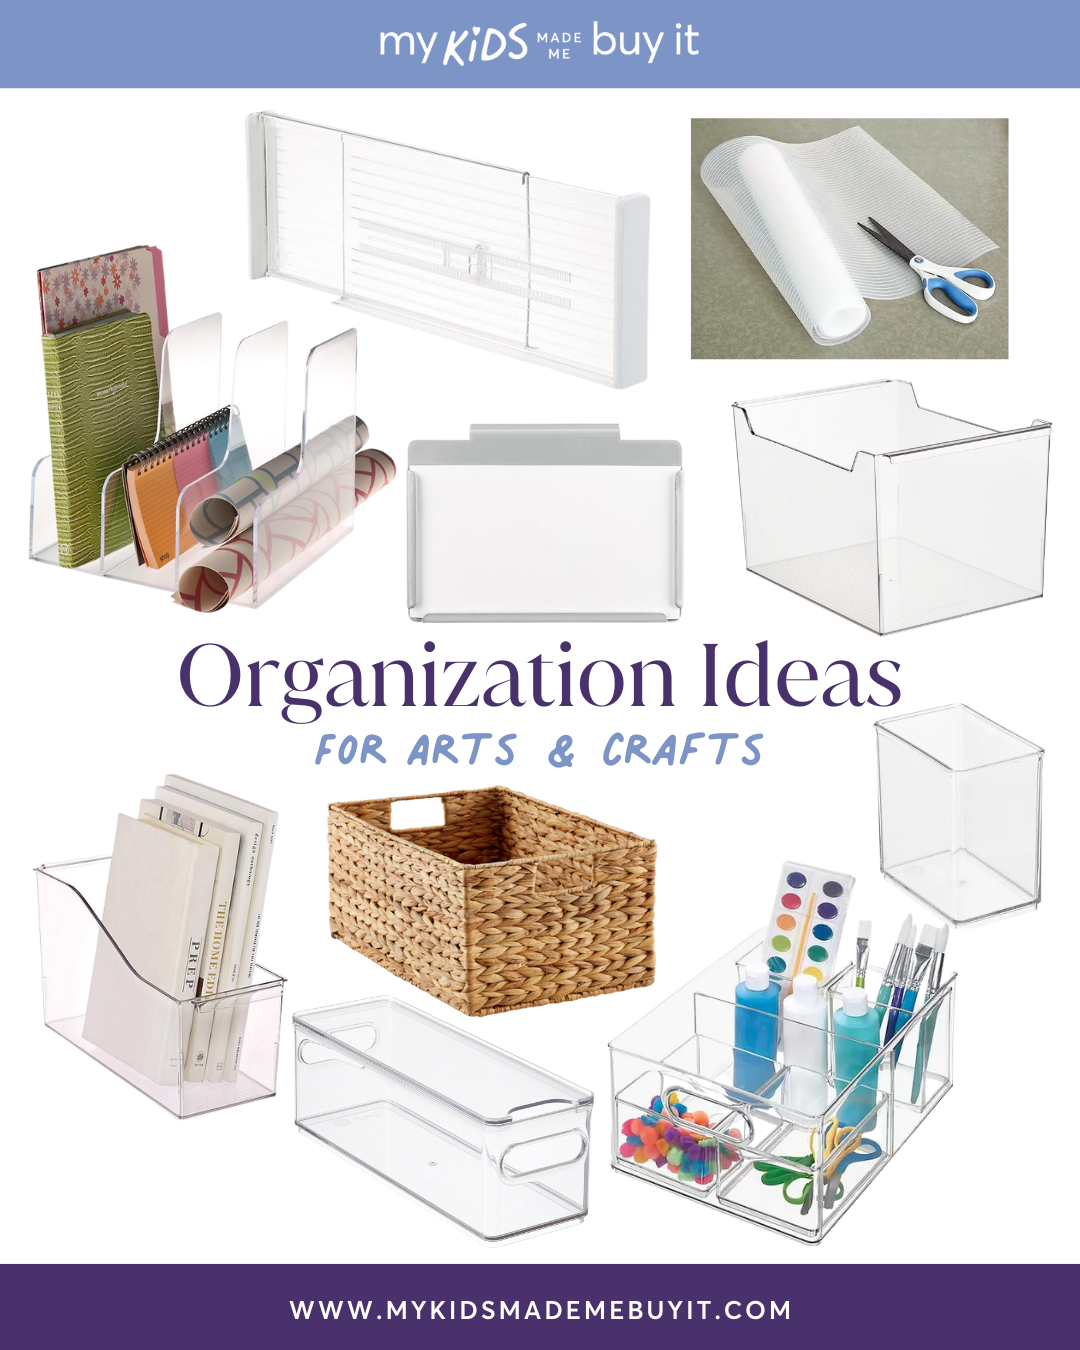 Organization Ideas for Arts & Crafts